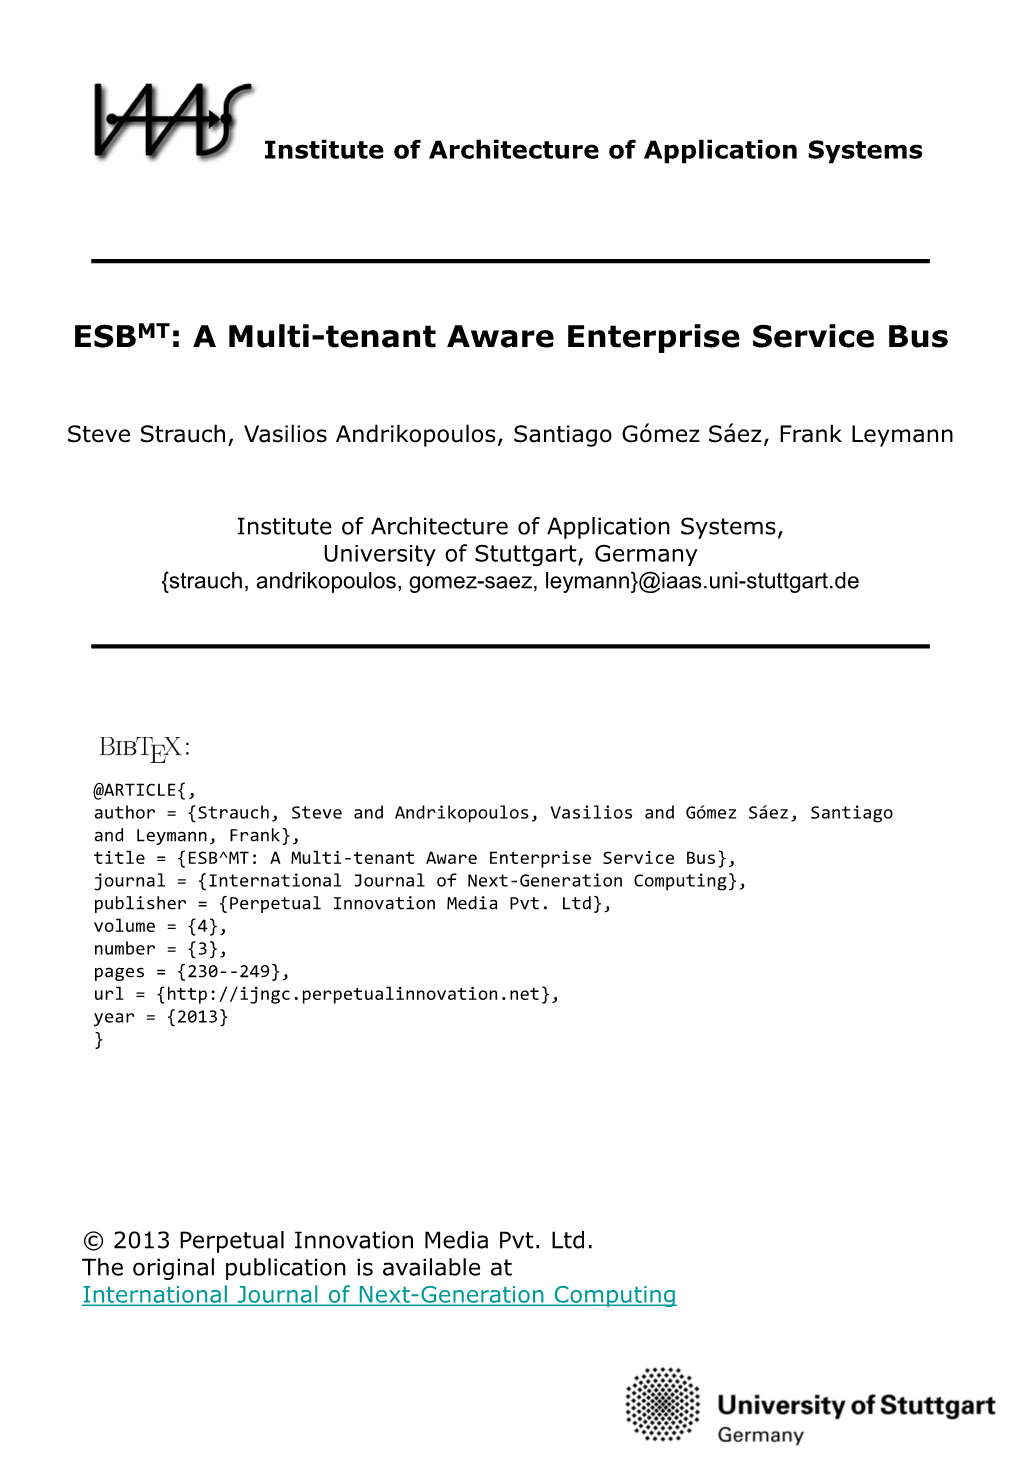 ESBMT: a Multi-Tenant Aware Enterprise Service Bus